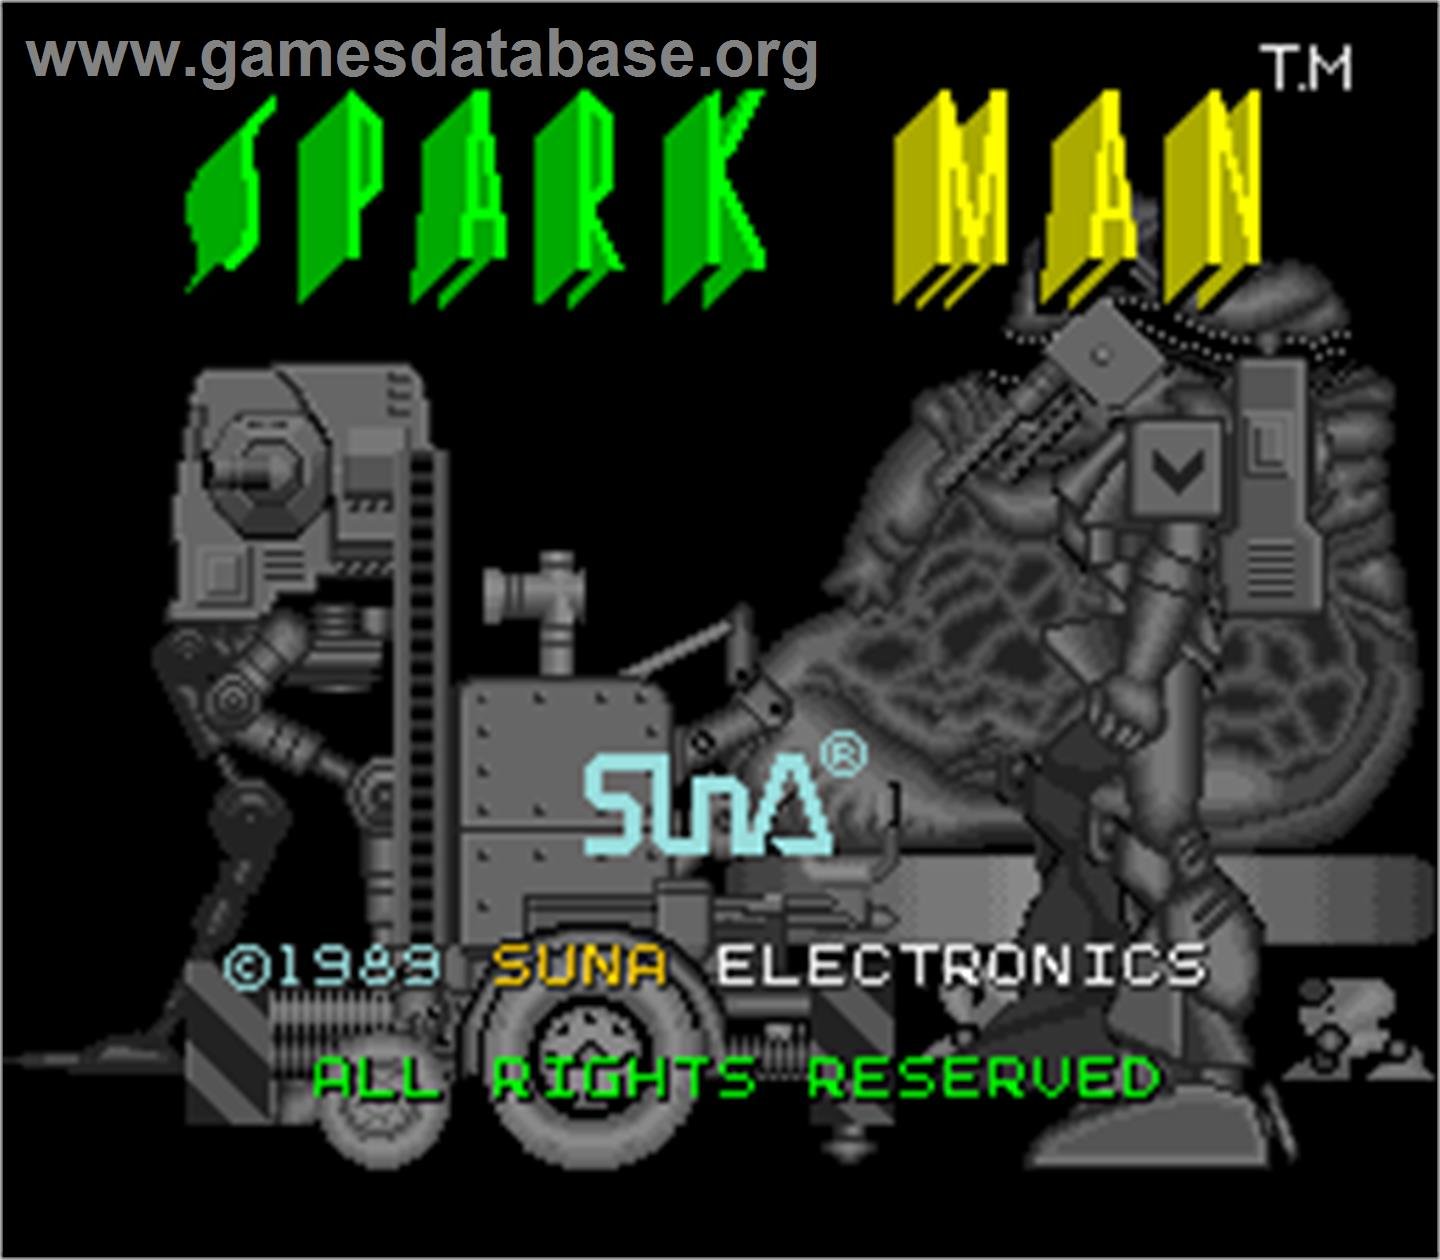 Image of Spark Man